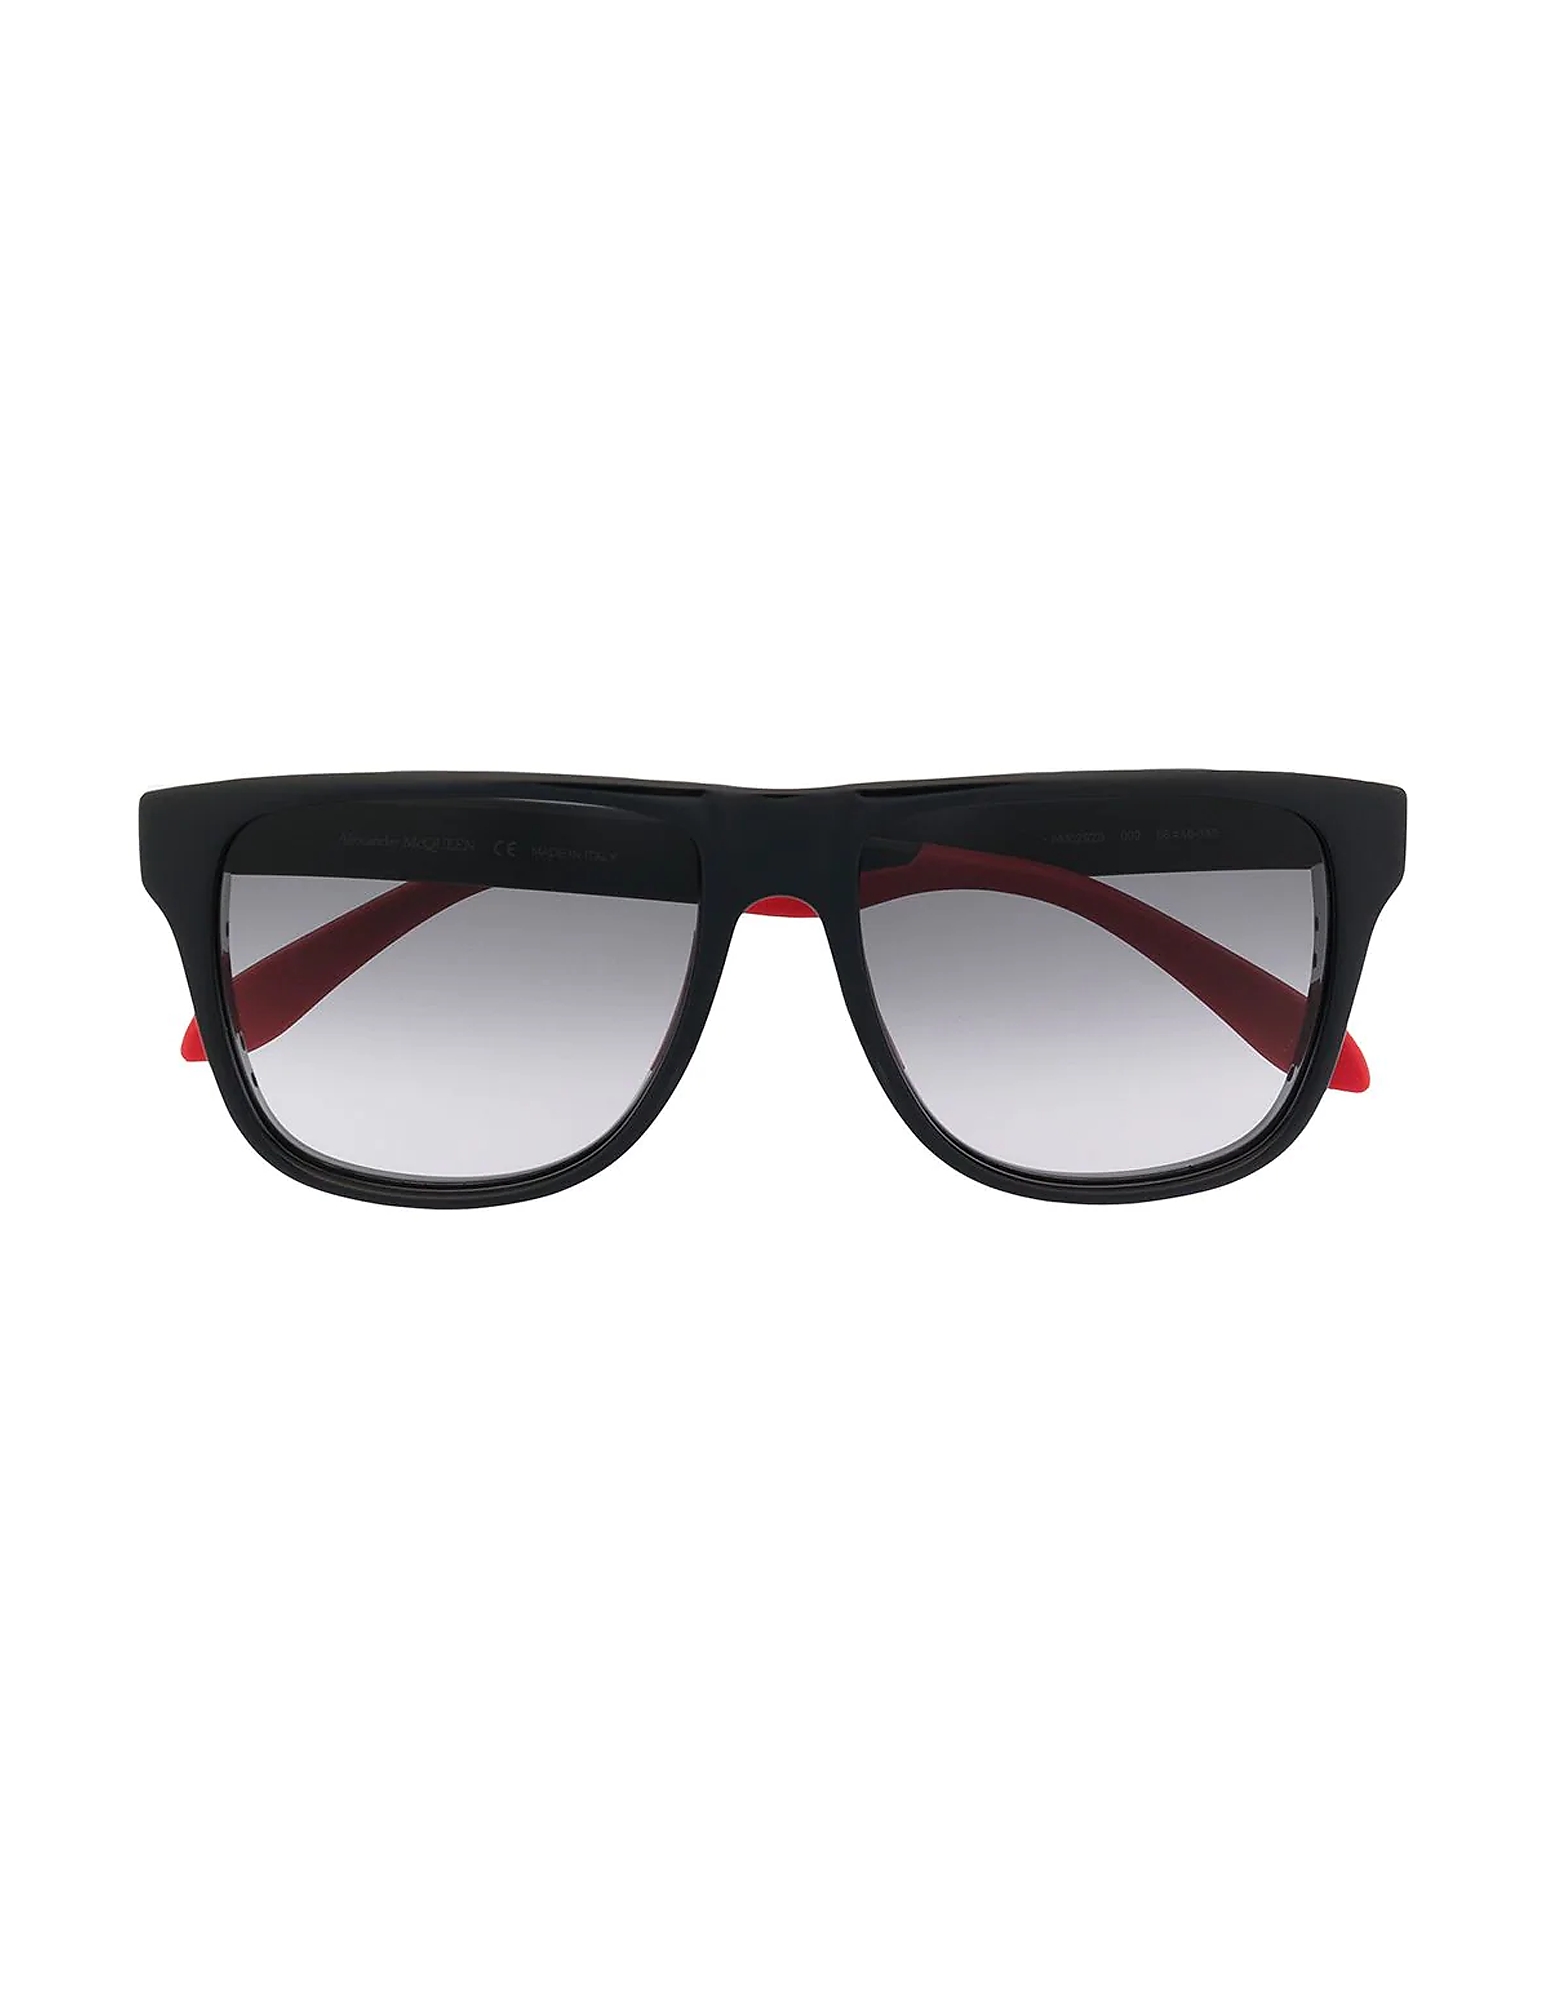 Alexander McQueen Sunglasses AM0292S Black/Red Rubber and Acetate Square Frame Unisex Sunglasses